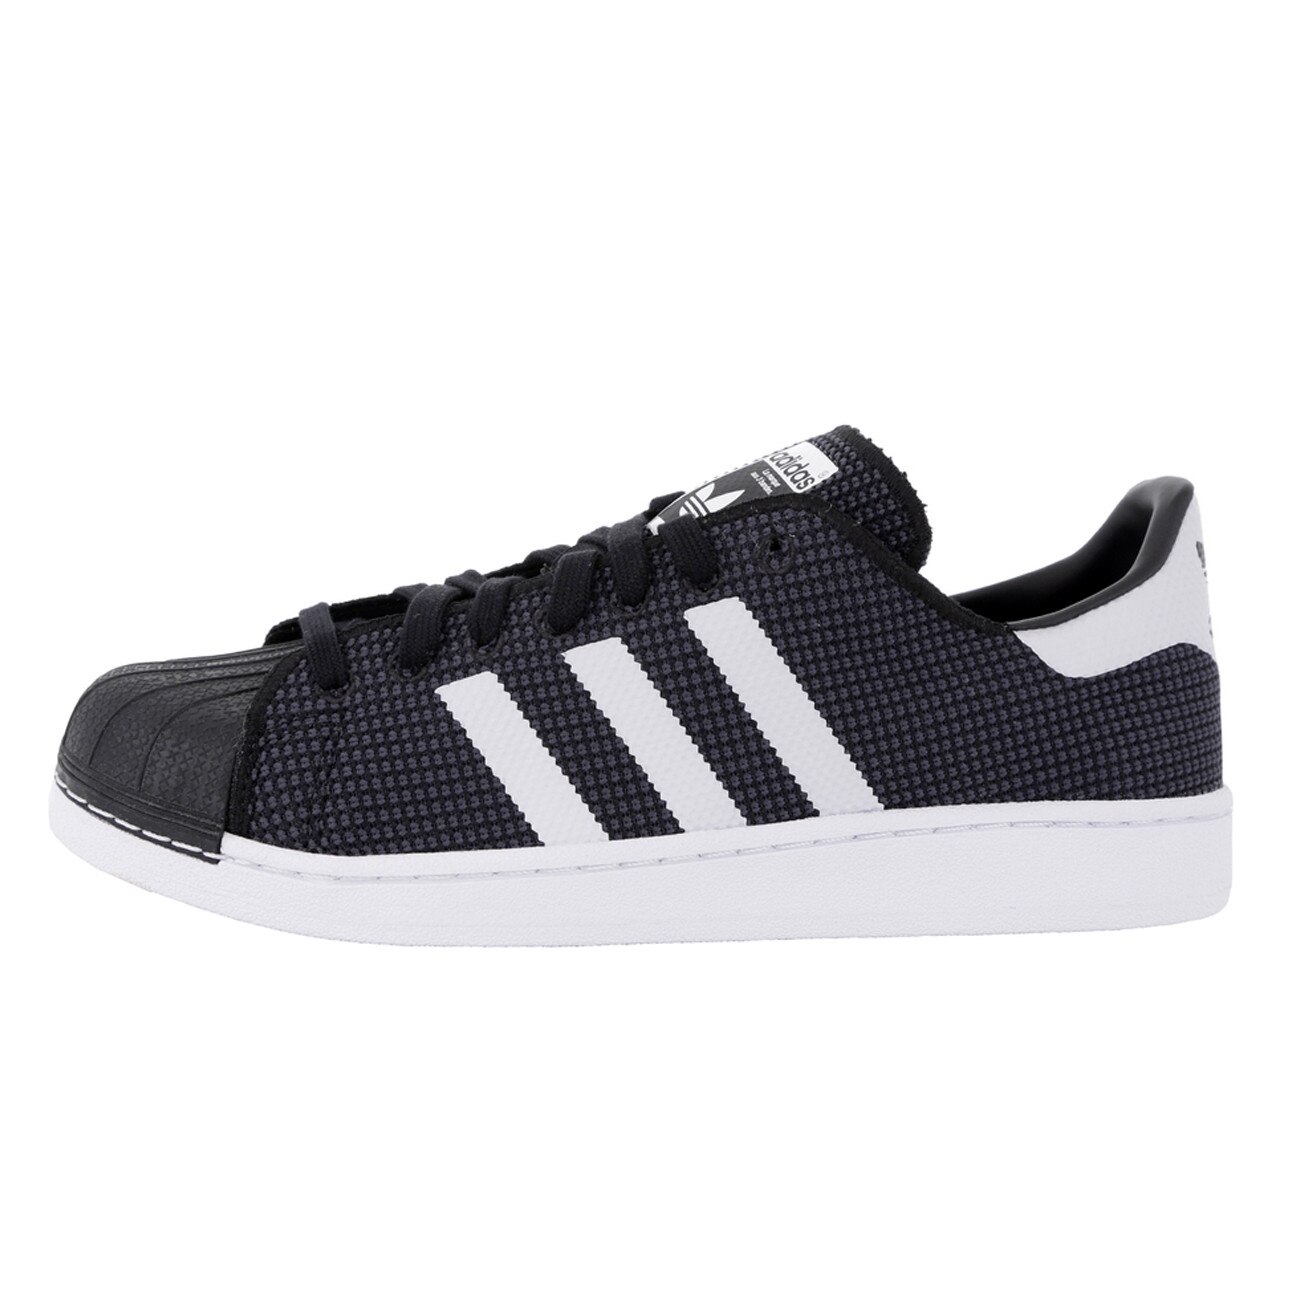 Insist constant tenant Pantofi sport barbati Adidas Originals SUPERSTAR negru/alb, 44 2/3 - eMAG.ro